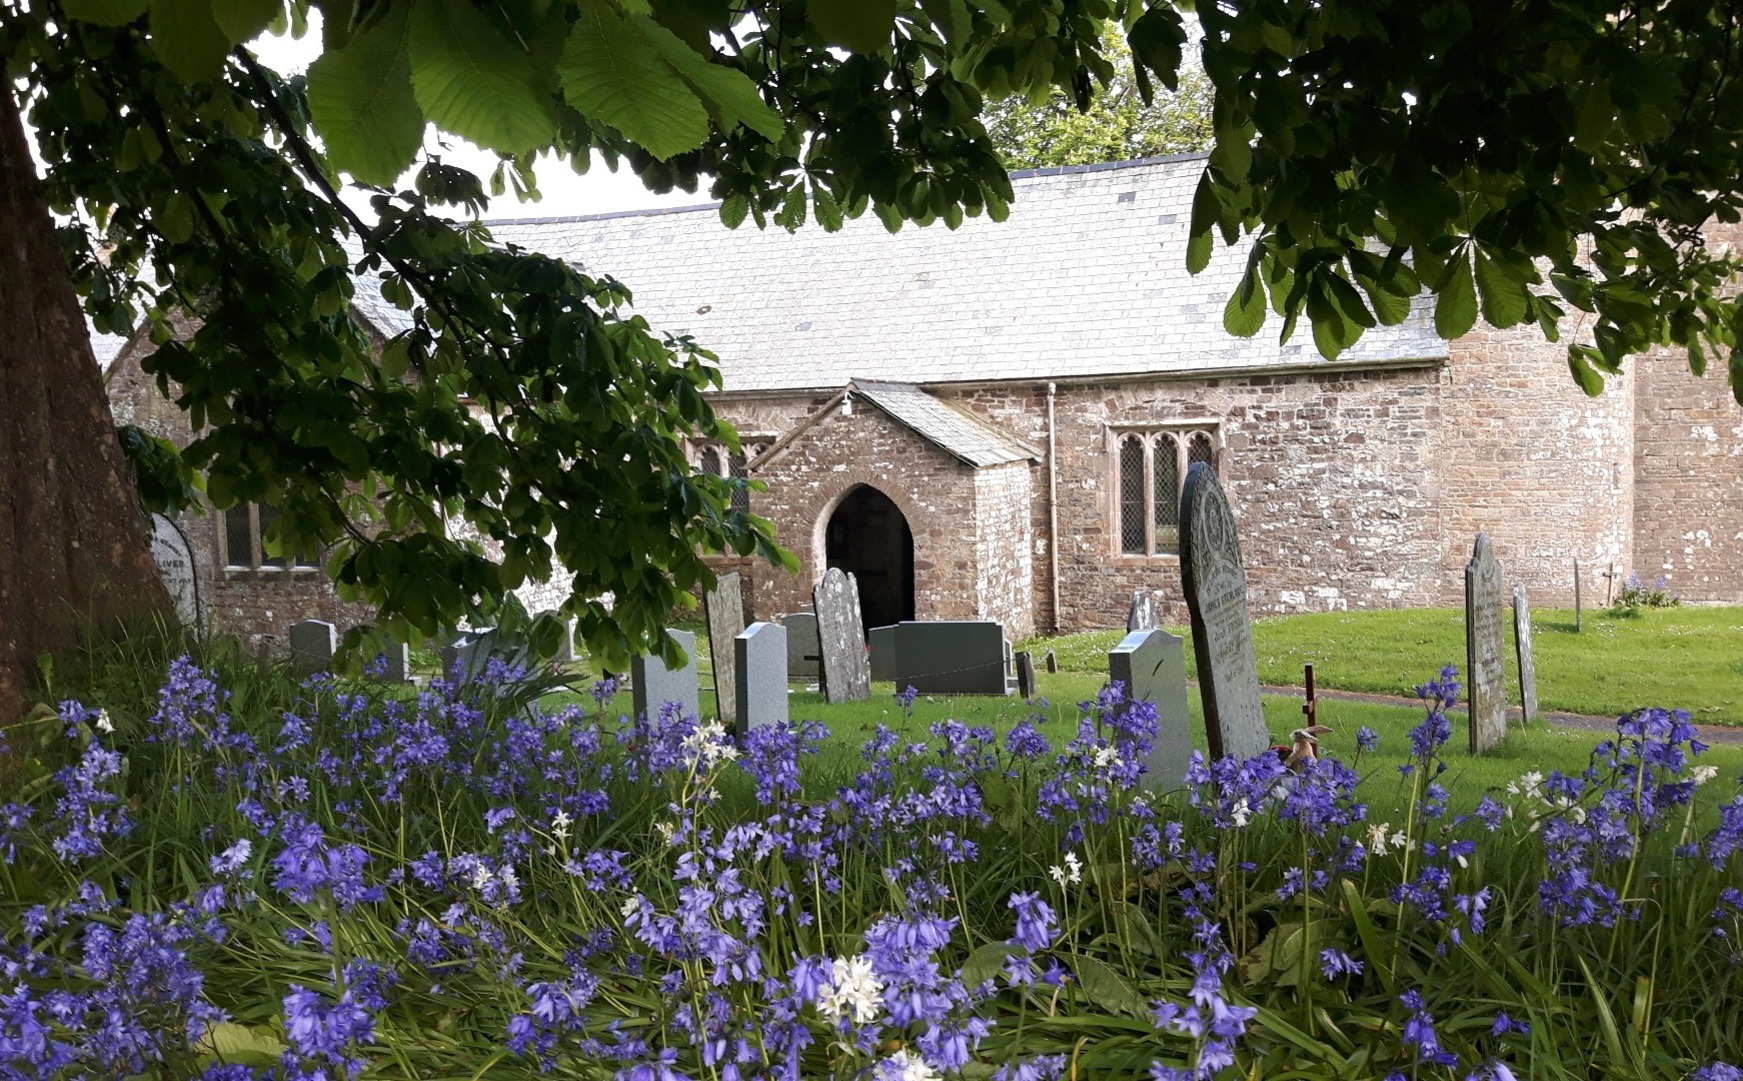 The local church near Larkworthy Farm